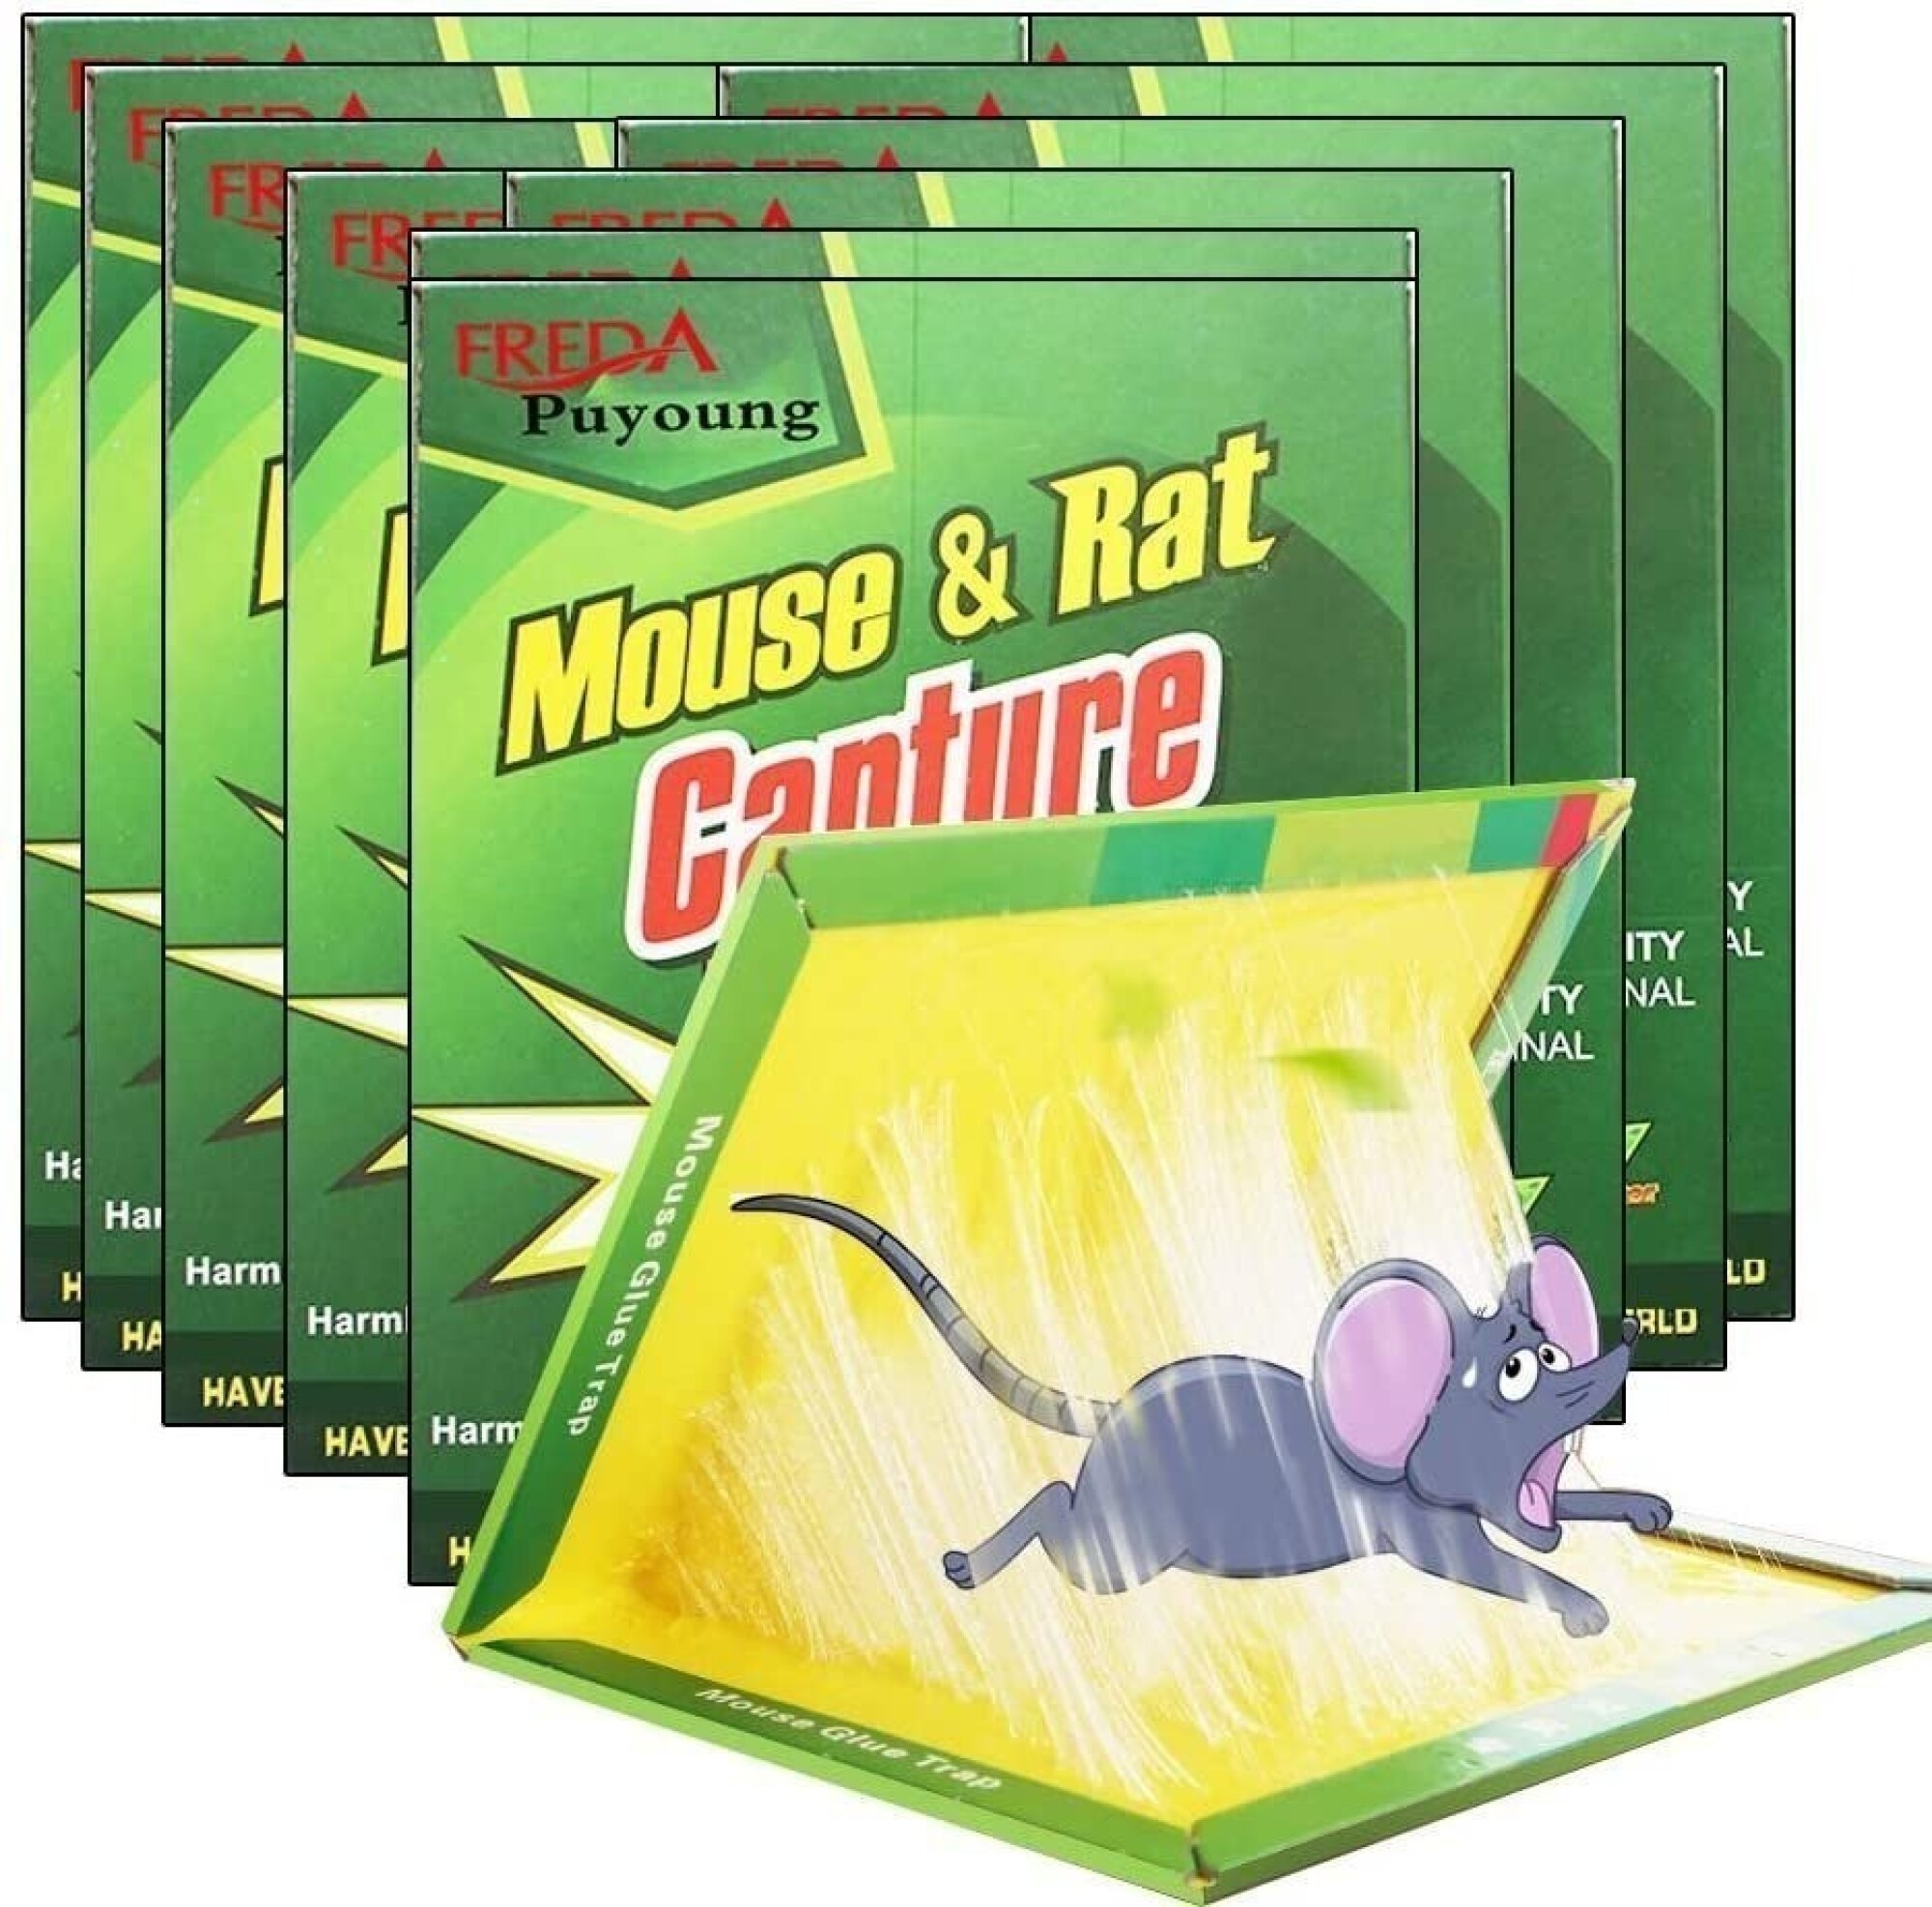 Trampa Para Ratas Ratones Pericotes Pegamento Adhesivo X6